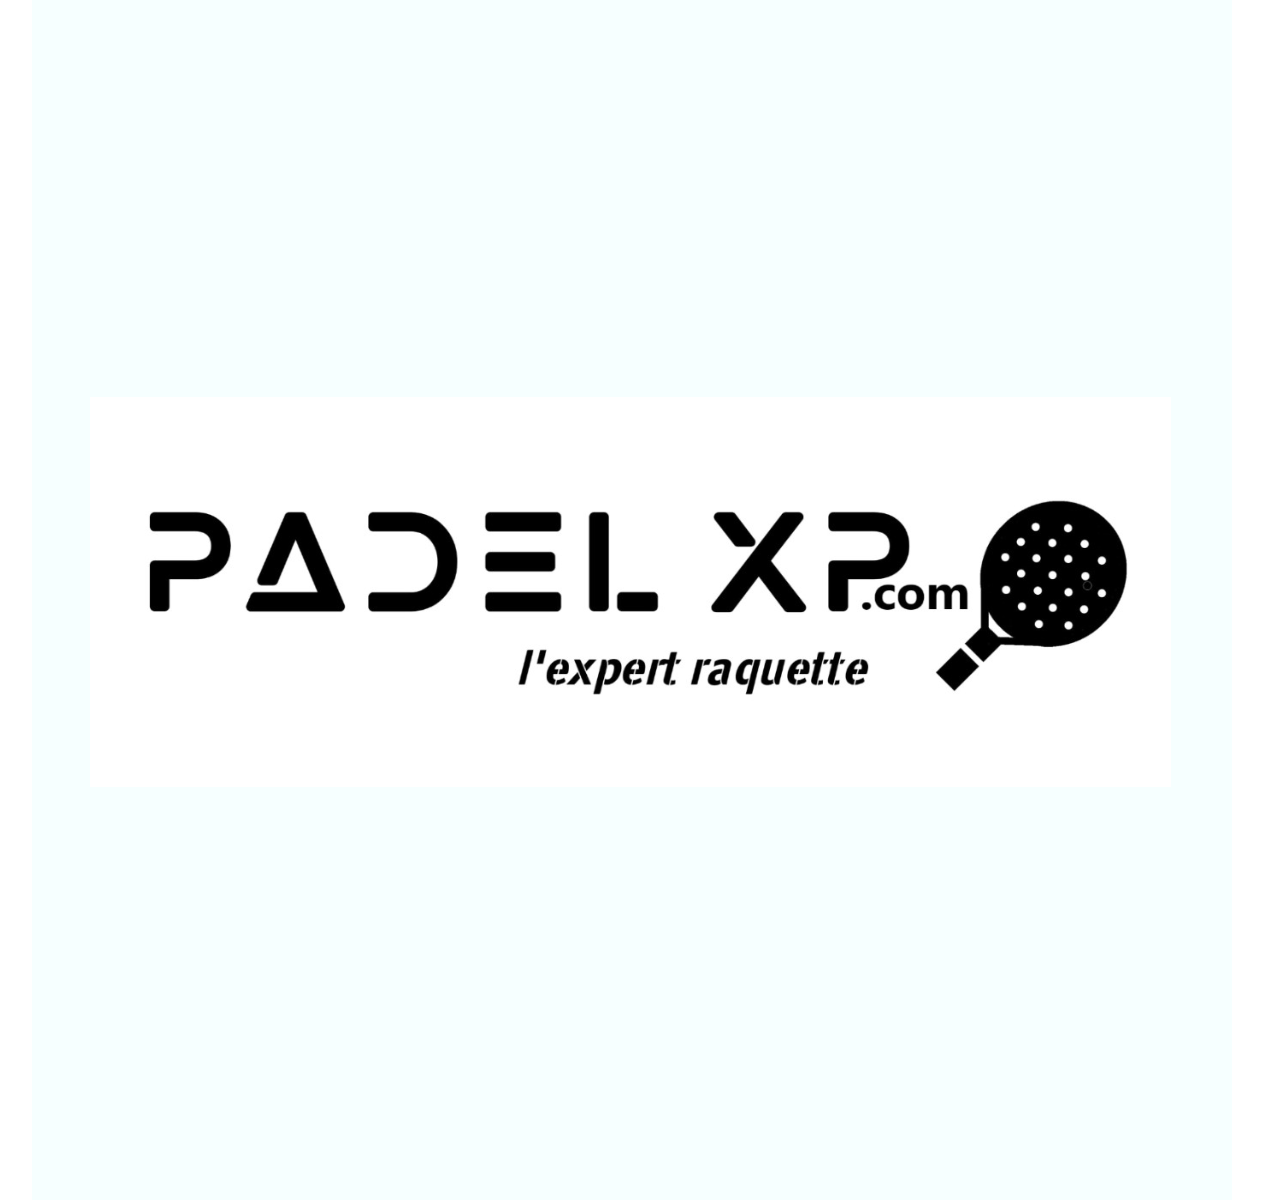 Logo_PadelXPcom3